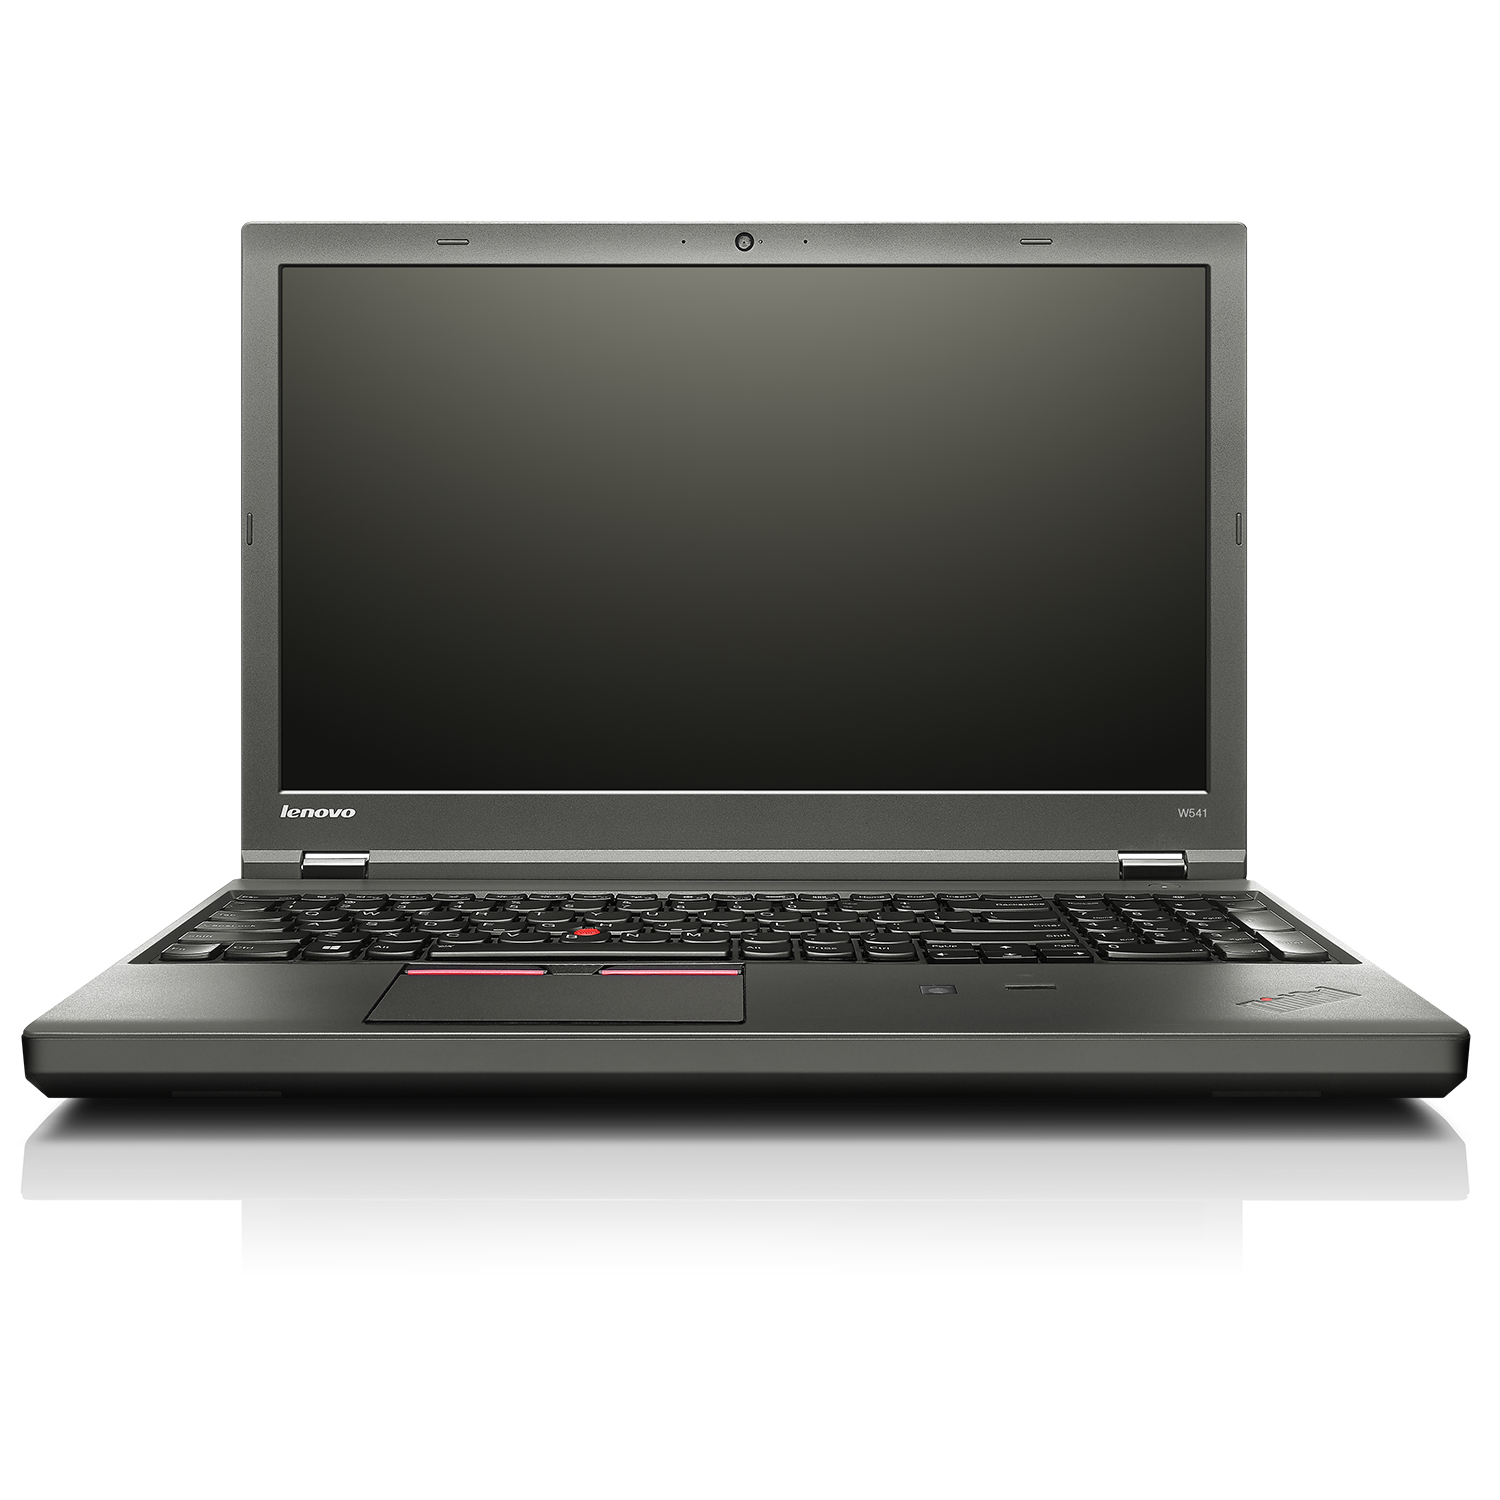 Lenovo ThinkPad W541 Клас A| Лаптопи втора ръка | iZone